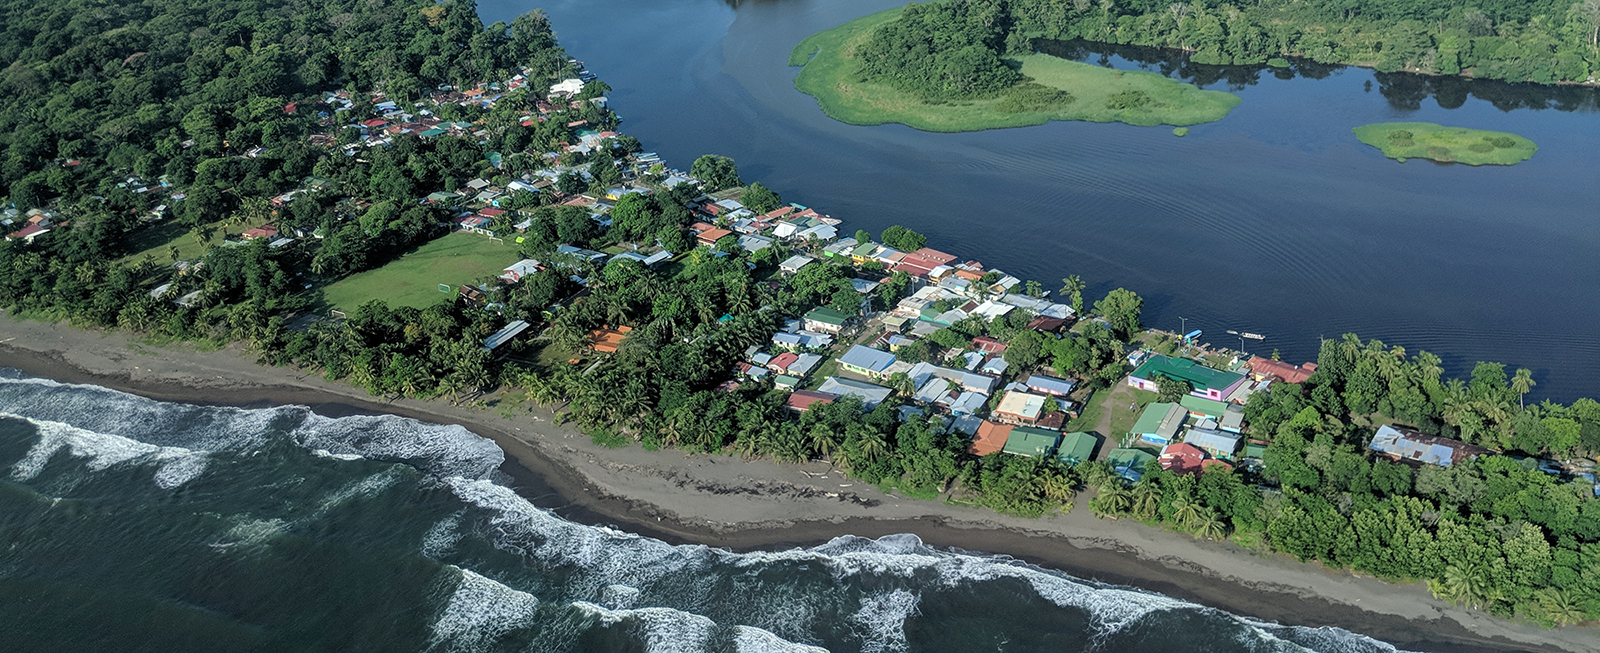 Cahuita to Tortuguero National Park – River Boat  Shuttle to the “Costa Rica’s Amazon”